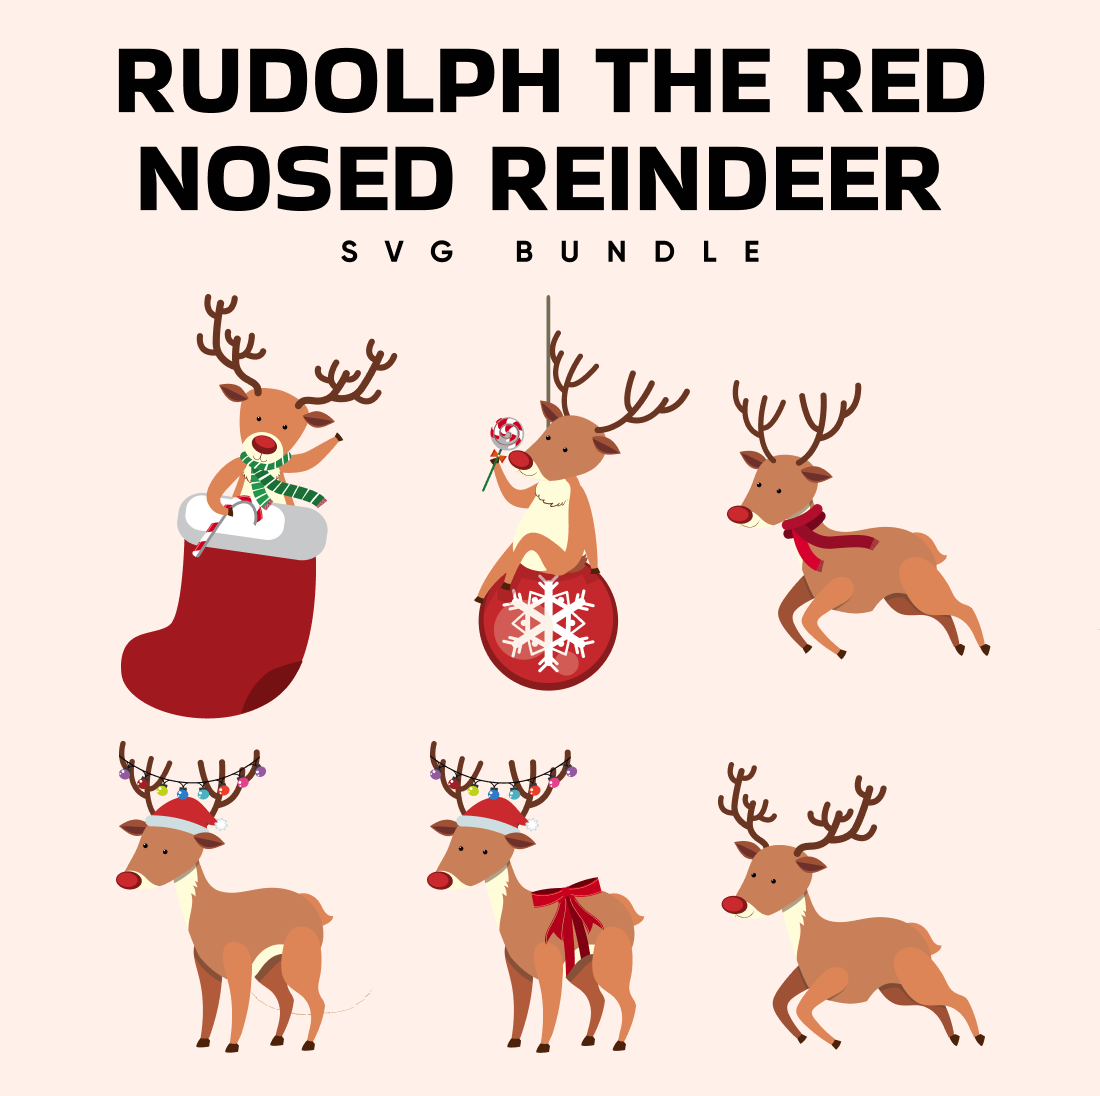 Rudolph the red nosed reindeer svg bundle.